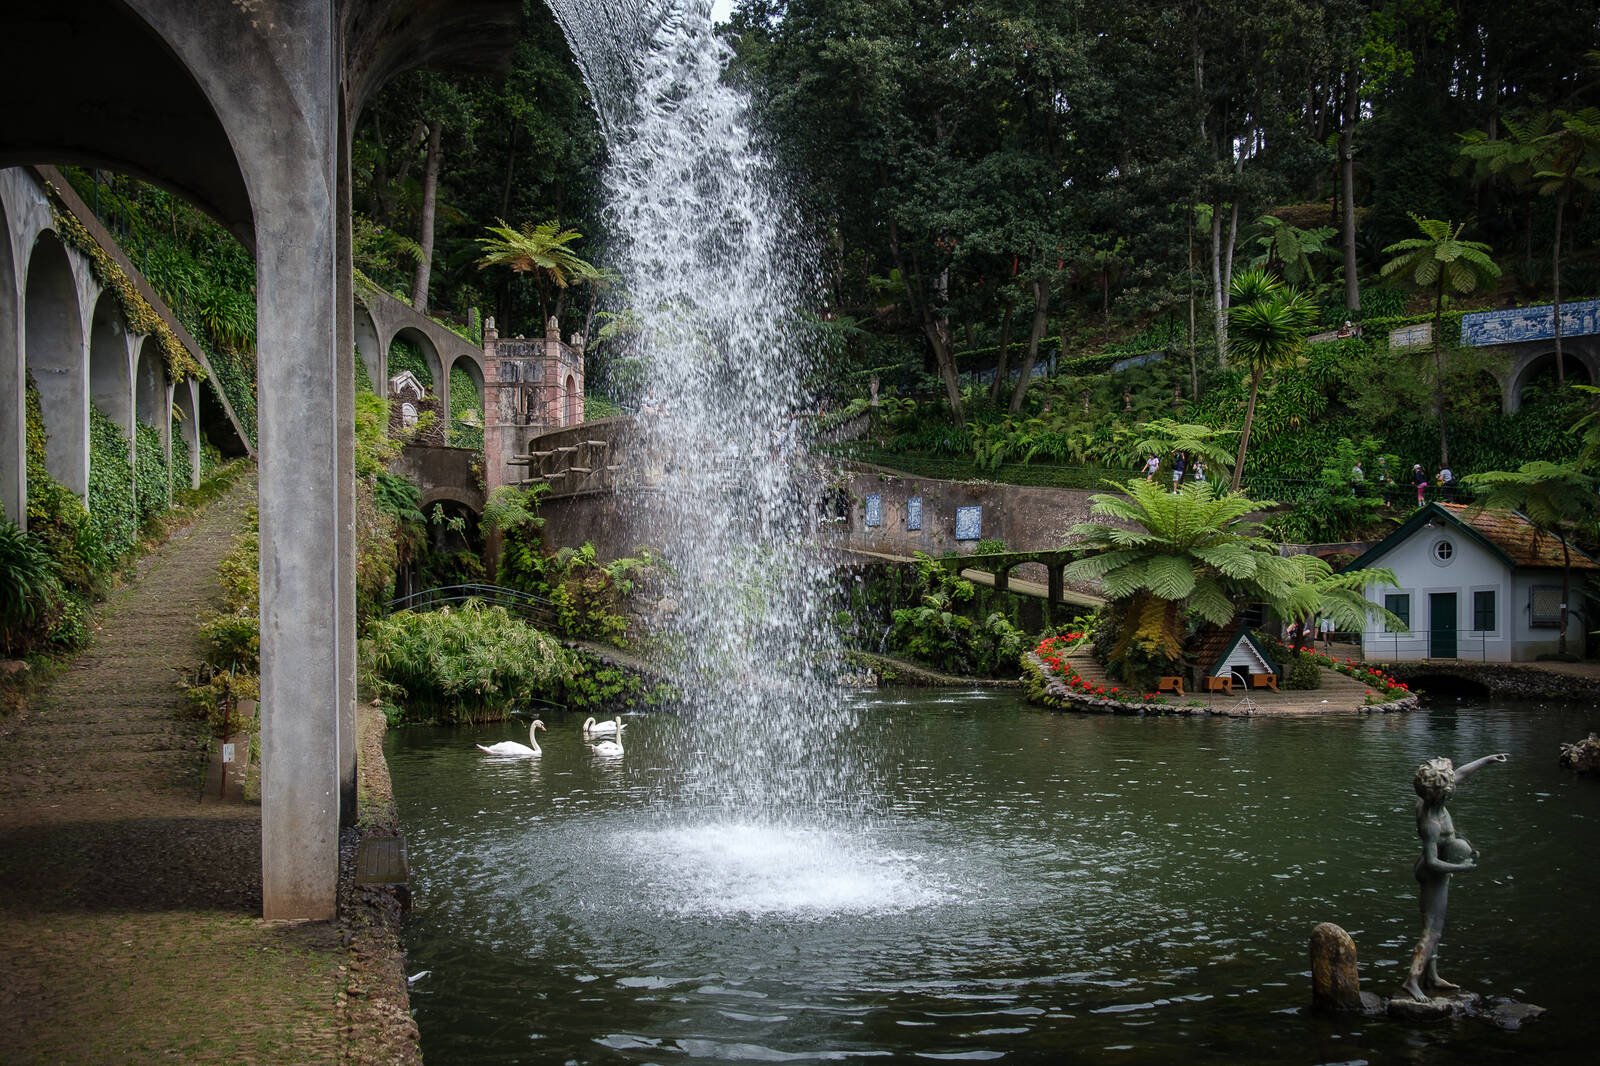 Image of Monte Palace Tropical Garden by Darlene Hildebrandt